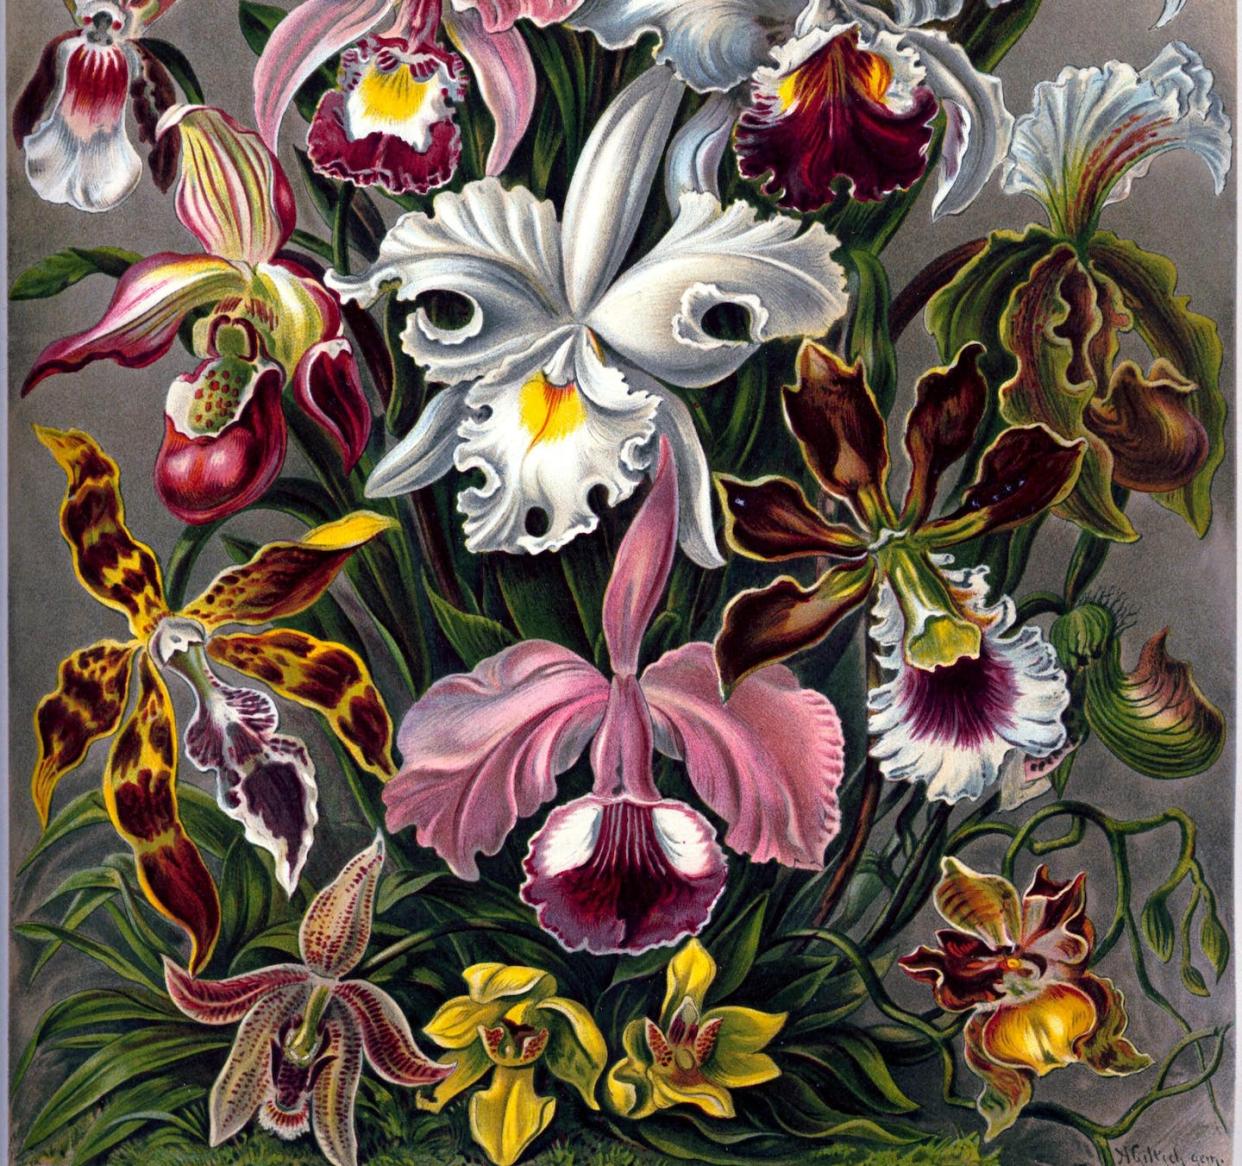 Lámina litográfica en color de la obra 'Kunstformen der Natur' de Ernst Haeckel, de 1899, que muestra una representación artística de distintas variedades de orquídeas: <a href="https://commons.wikimedia.org/wiki/File:Haeckel%27s_Orchids.jpg" rel="nofollow noopener" target="_blank" data-ylk="slk:Wikimedia Commons;elm:context_link;itc:0;sec:content-canvas" class="link ">Wikimedia Commons</a>